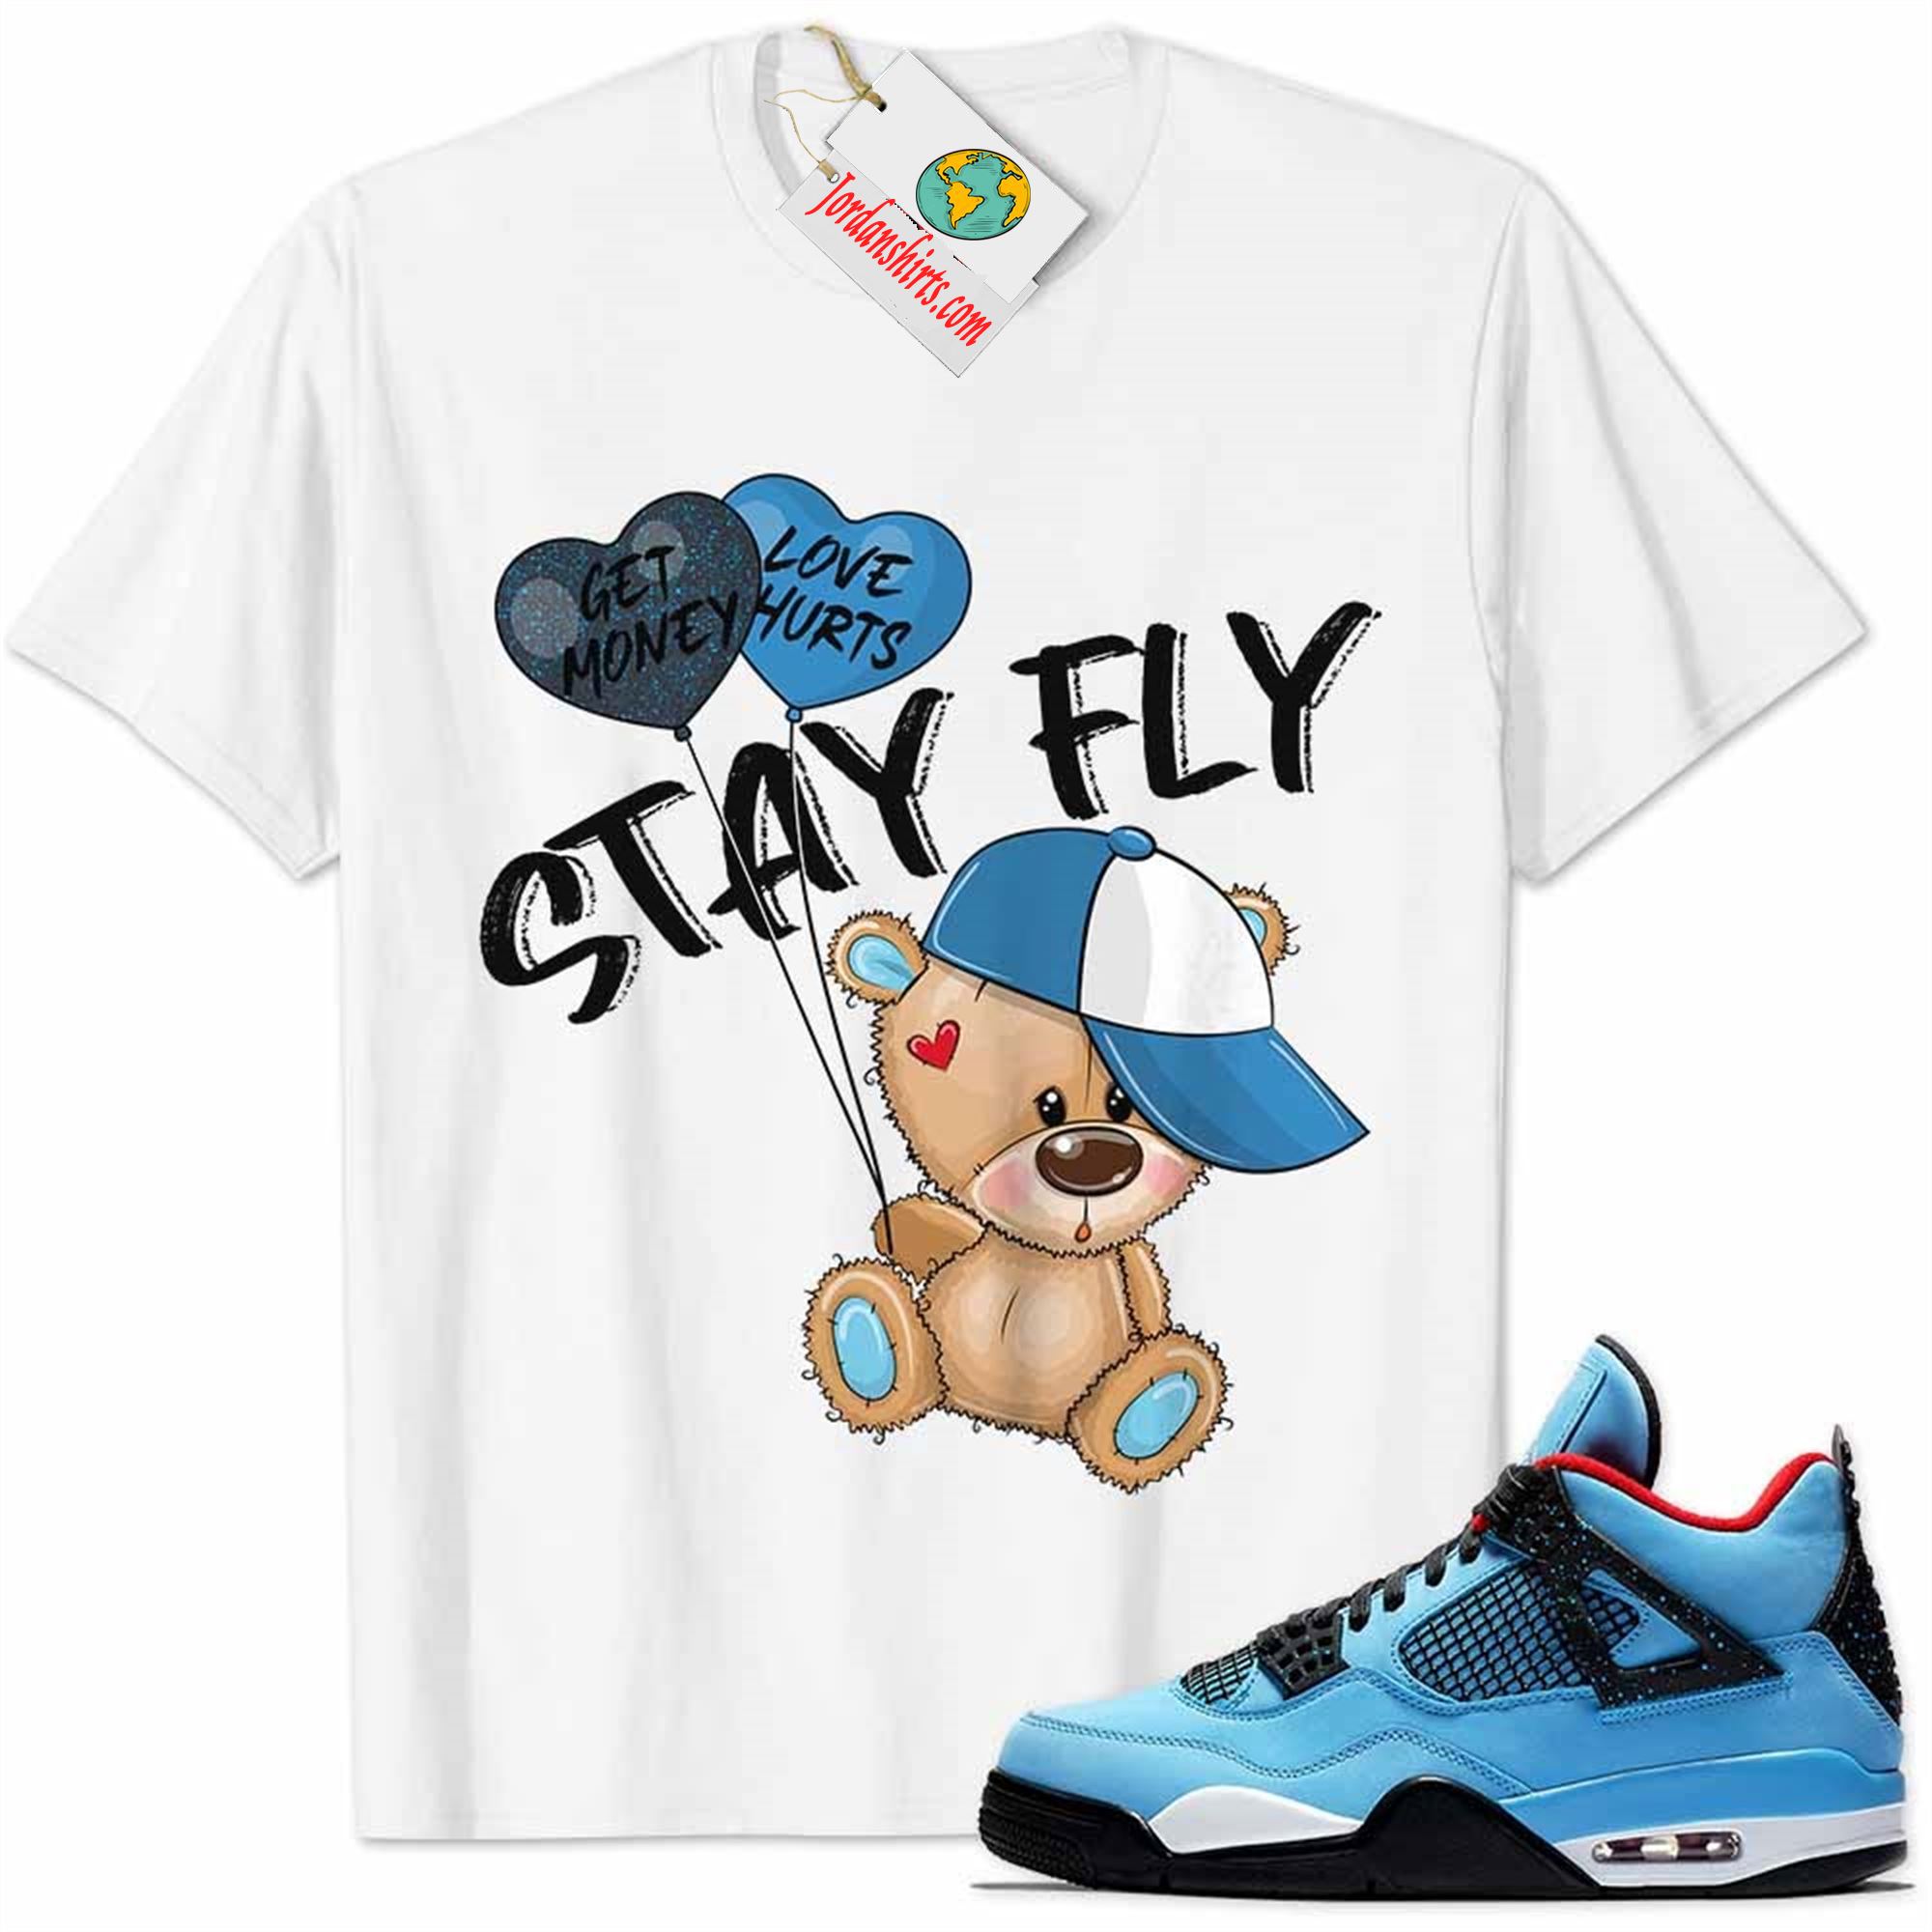 Jordan 4 Shirt, Cactus Jack Travis Scott 4s Shirt Cute Teddy Bear Stay Fly Get Money White Size Up To 5xl